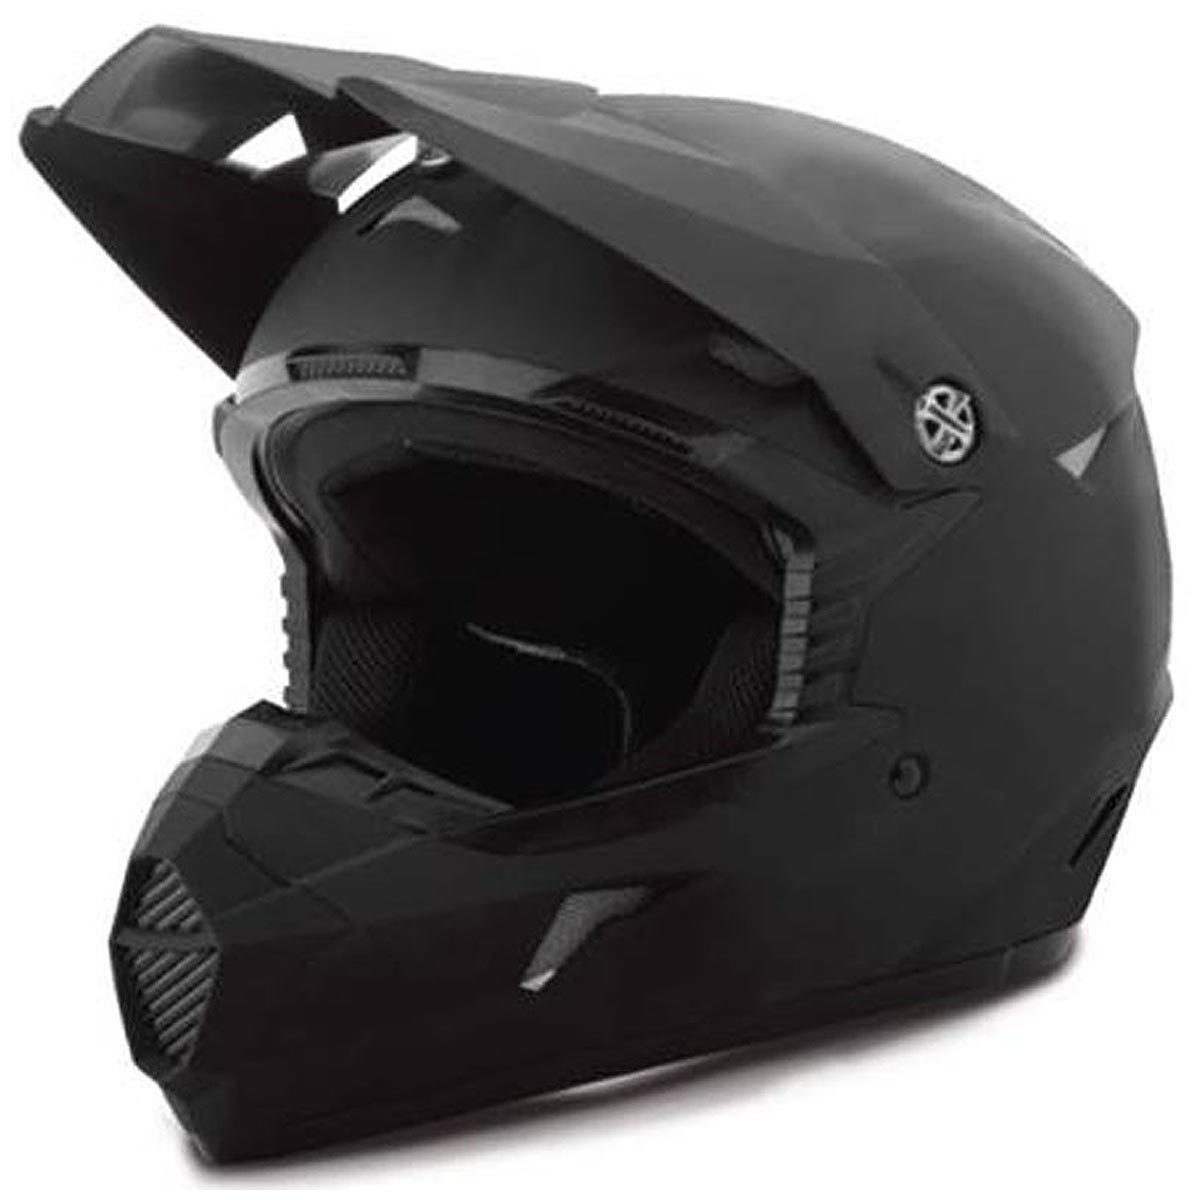 GMax MX46 Uncle Matte Black Youth Motocross Helmet